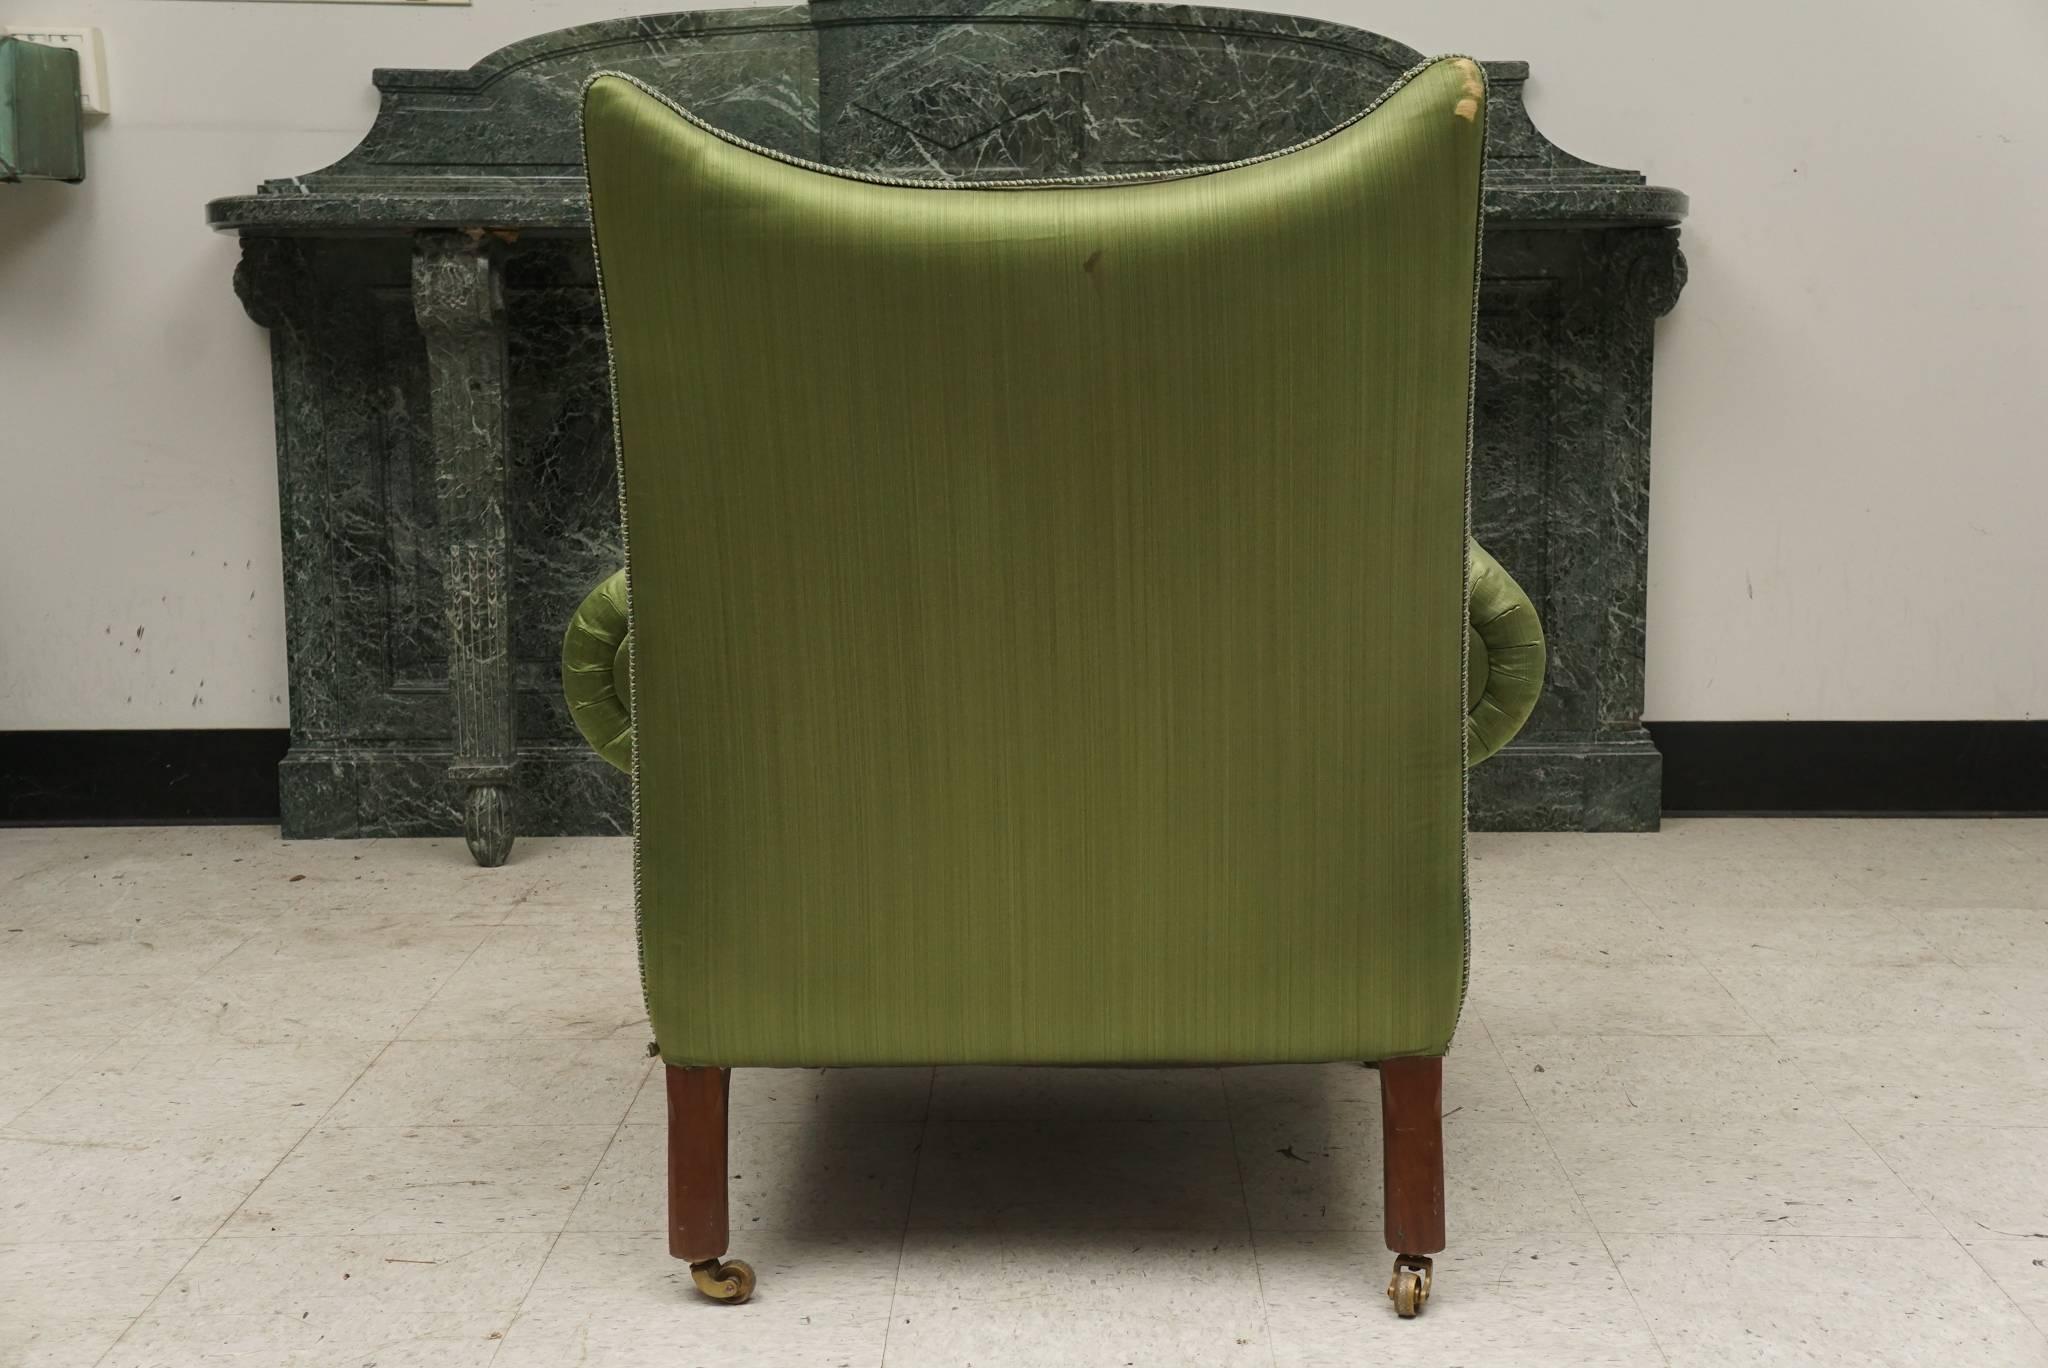 Cast Vintage Lounge Chair Designed in the Regency Taste